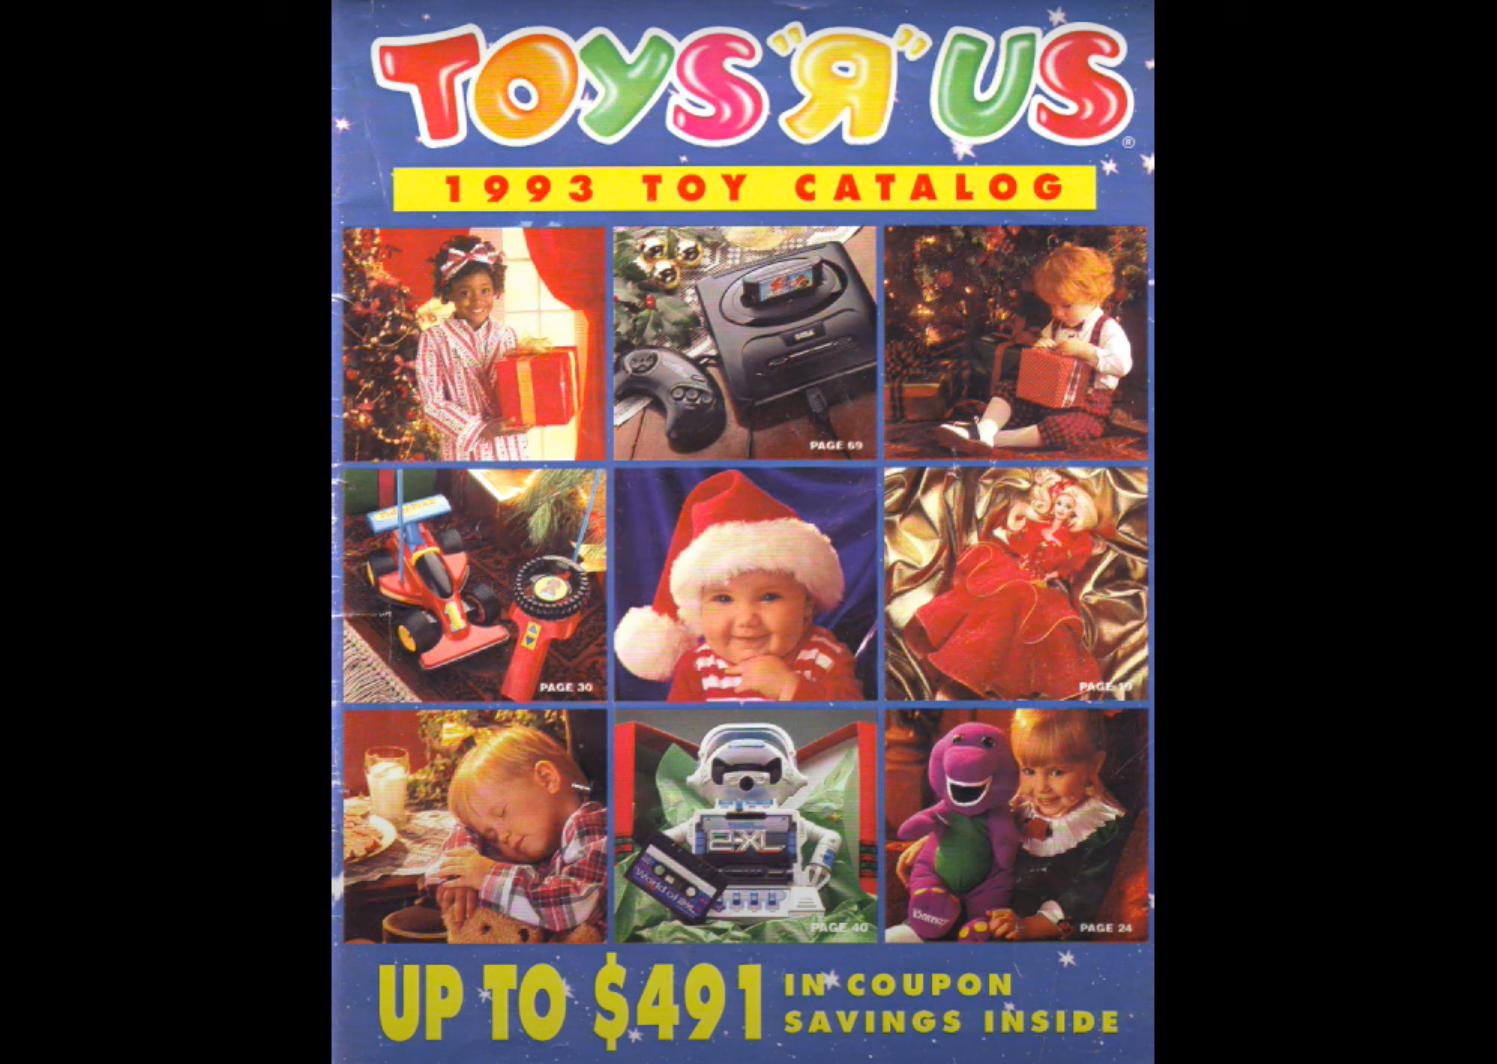 Toys R Us 1993 Christmas catalog